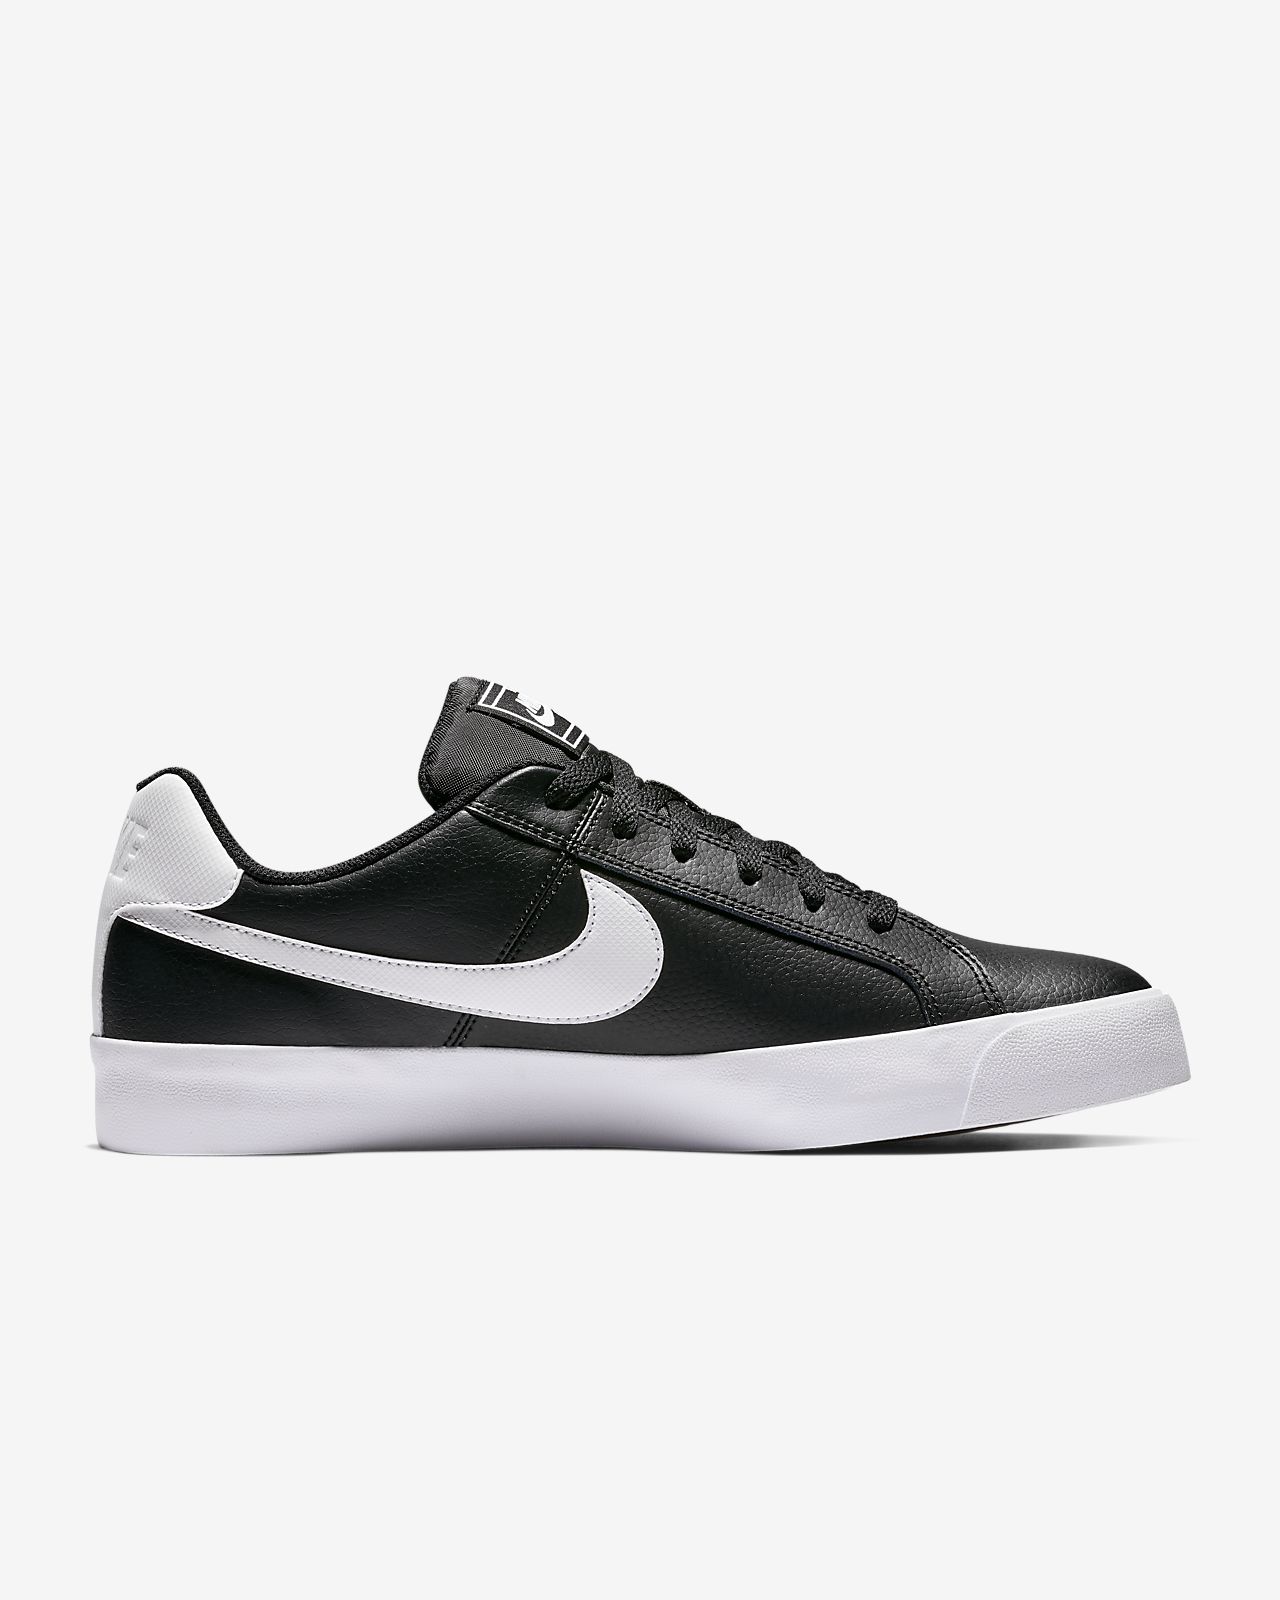 NikeCourt Royale AC Men's Shoe. Nike SG